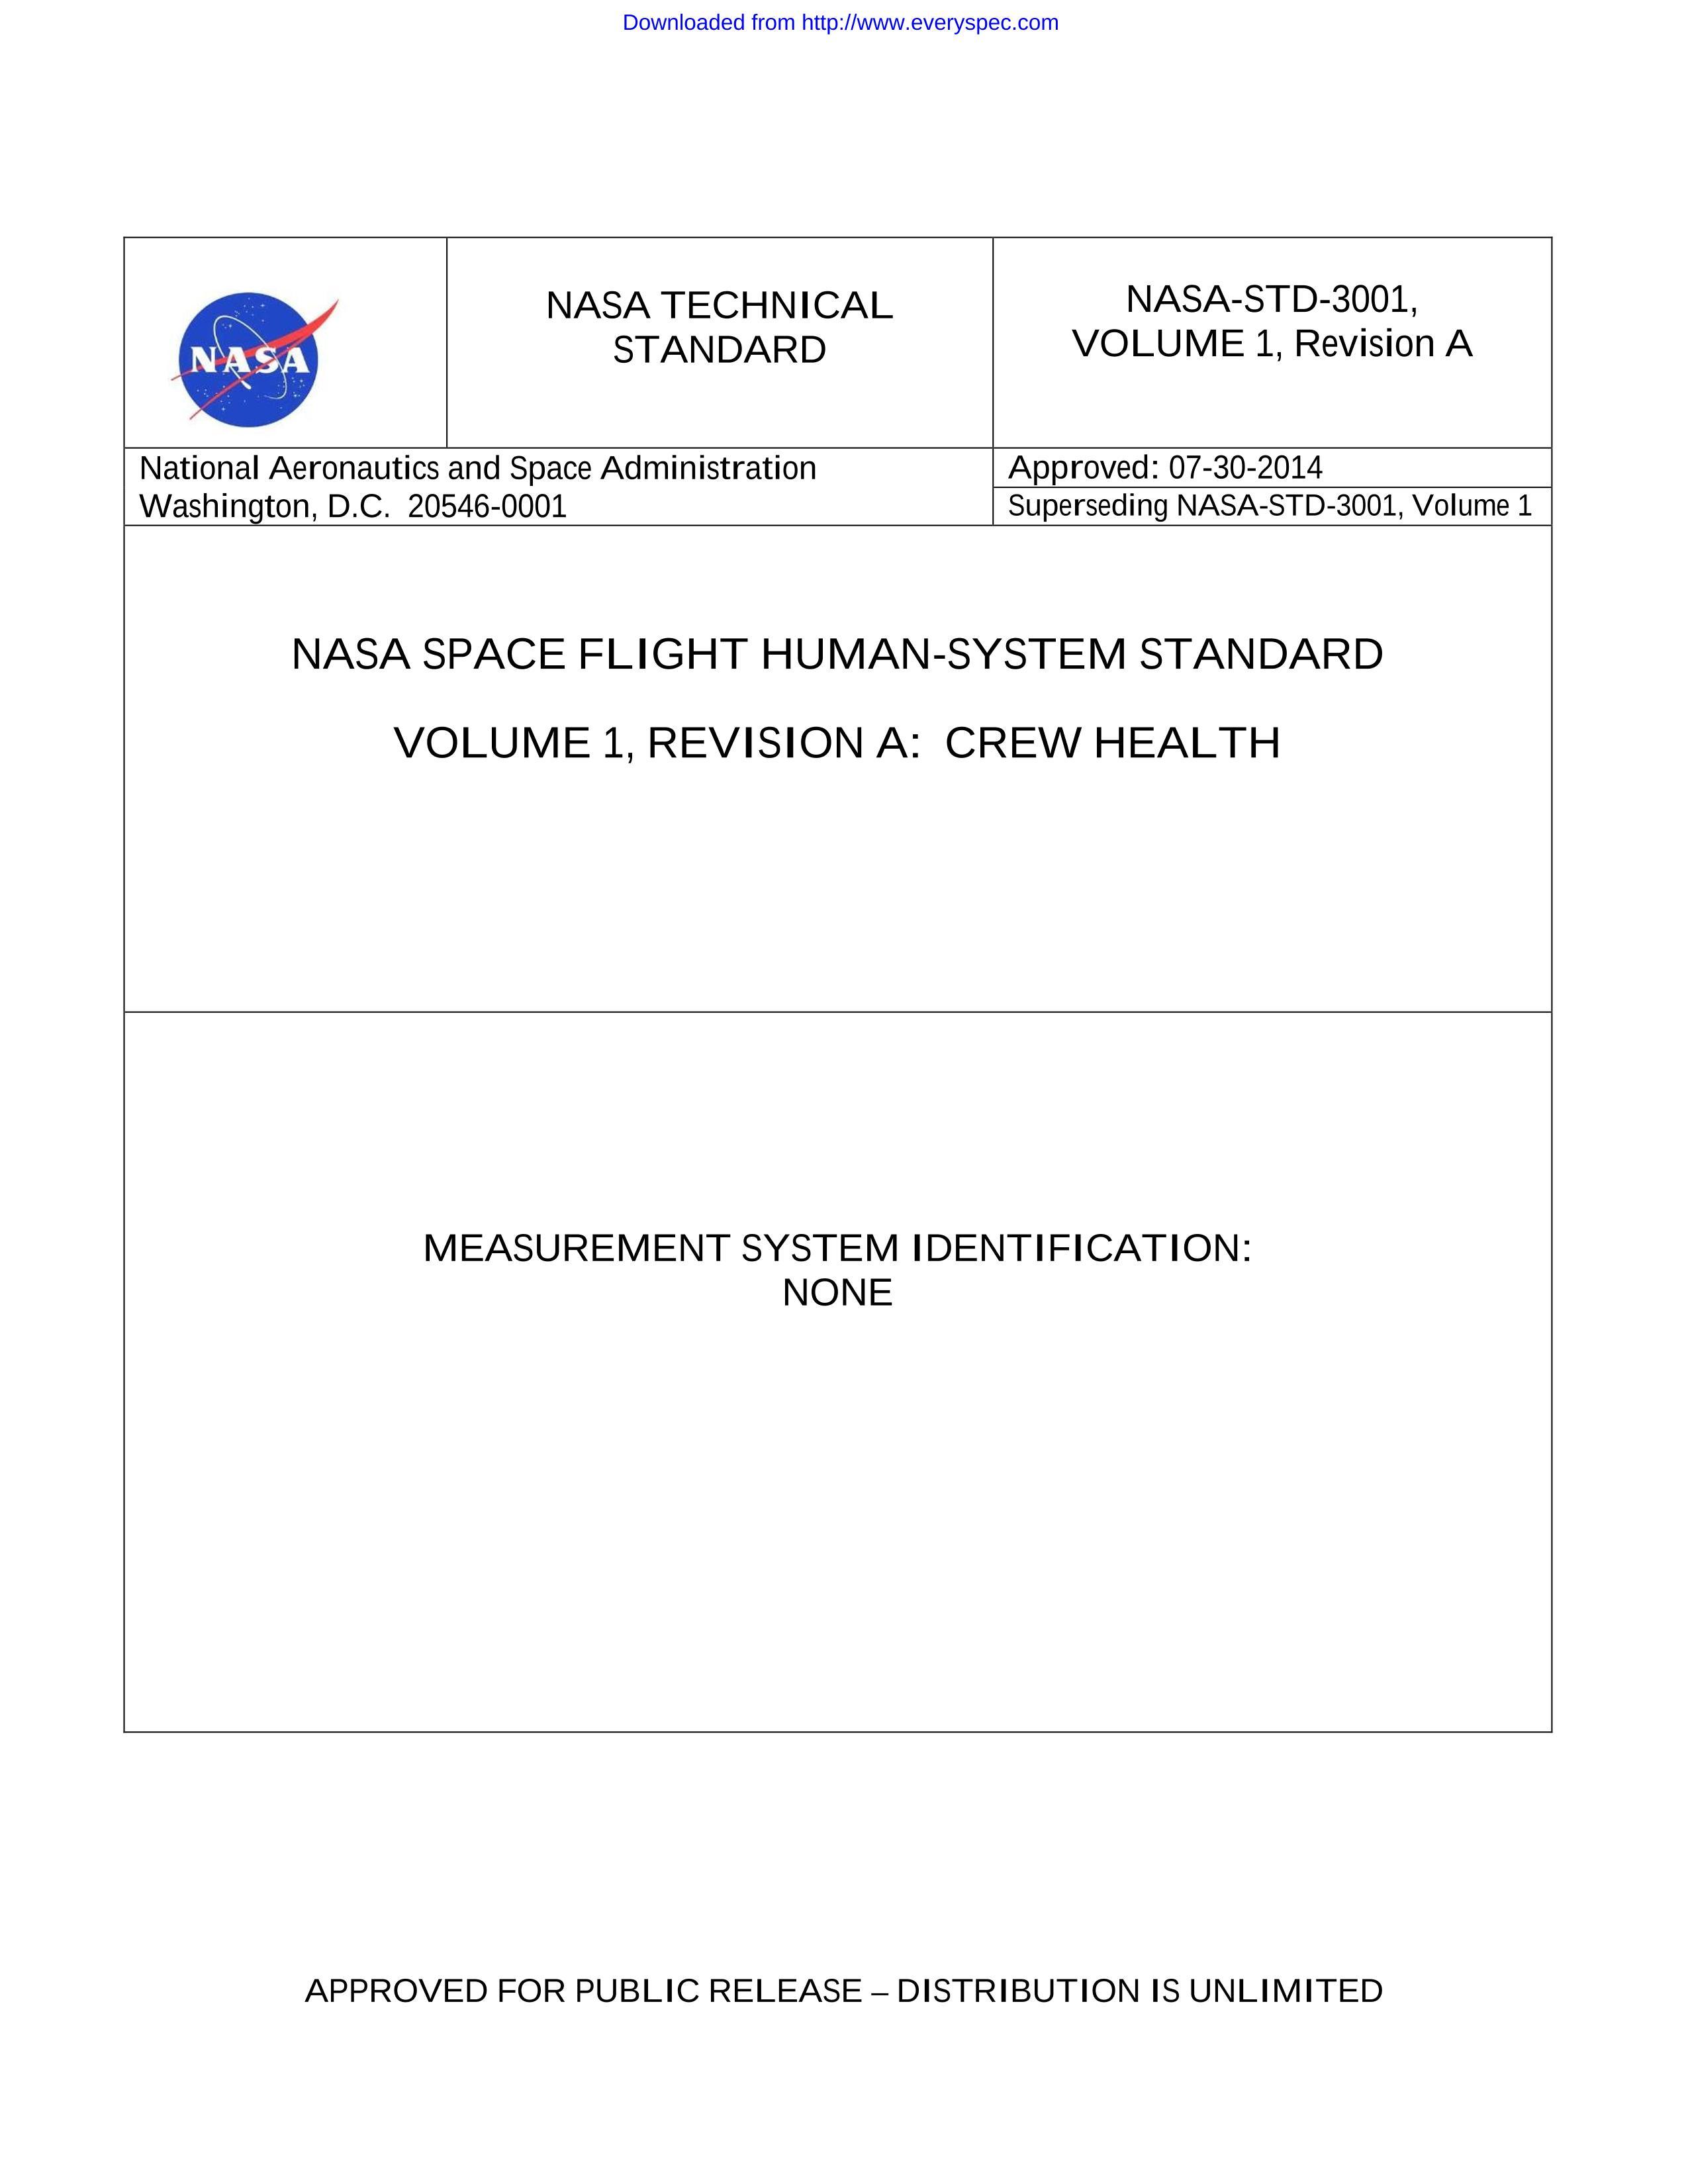 NASA-STD-3001 VOL-1.pdf1ҳ